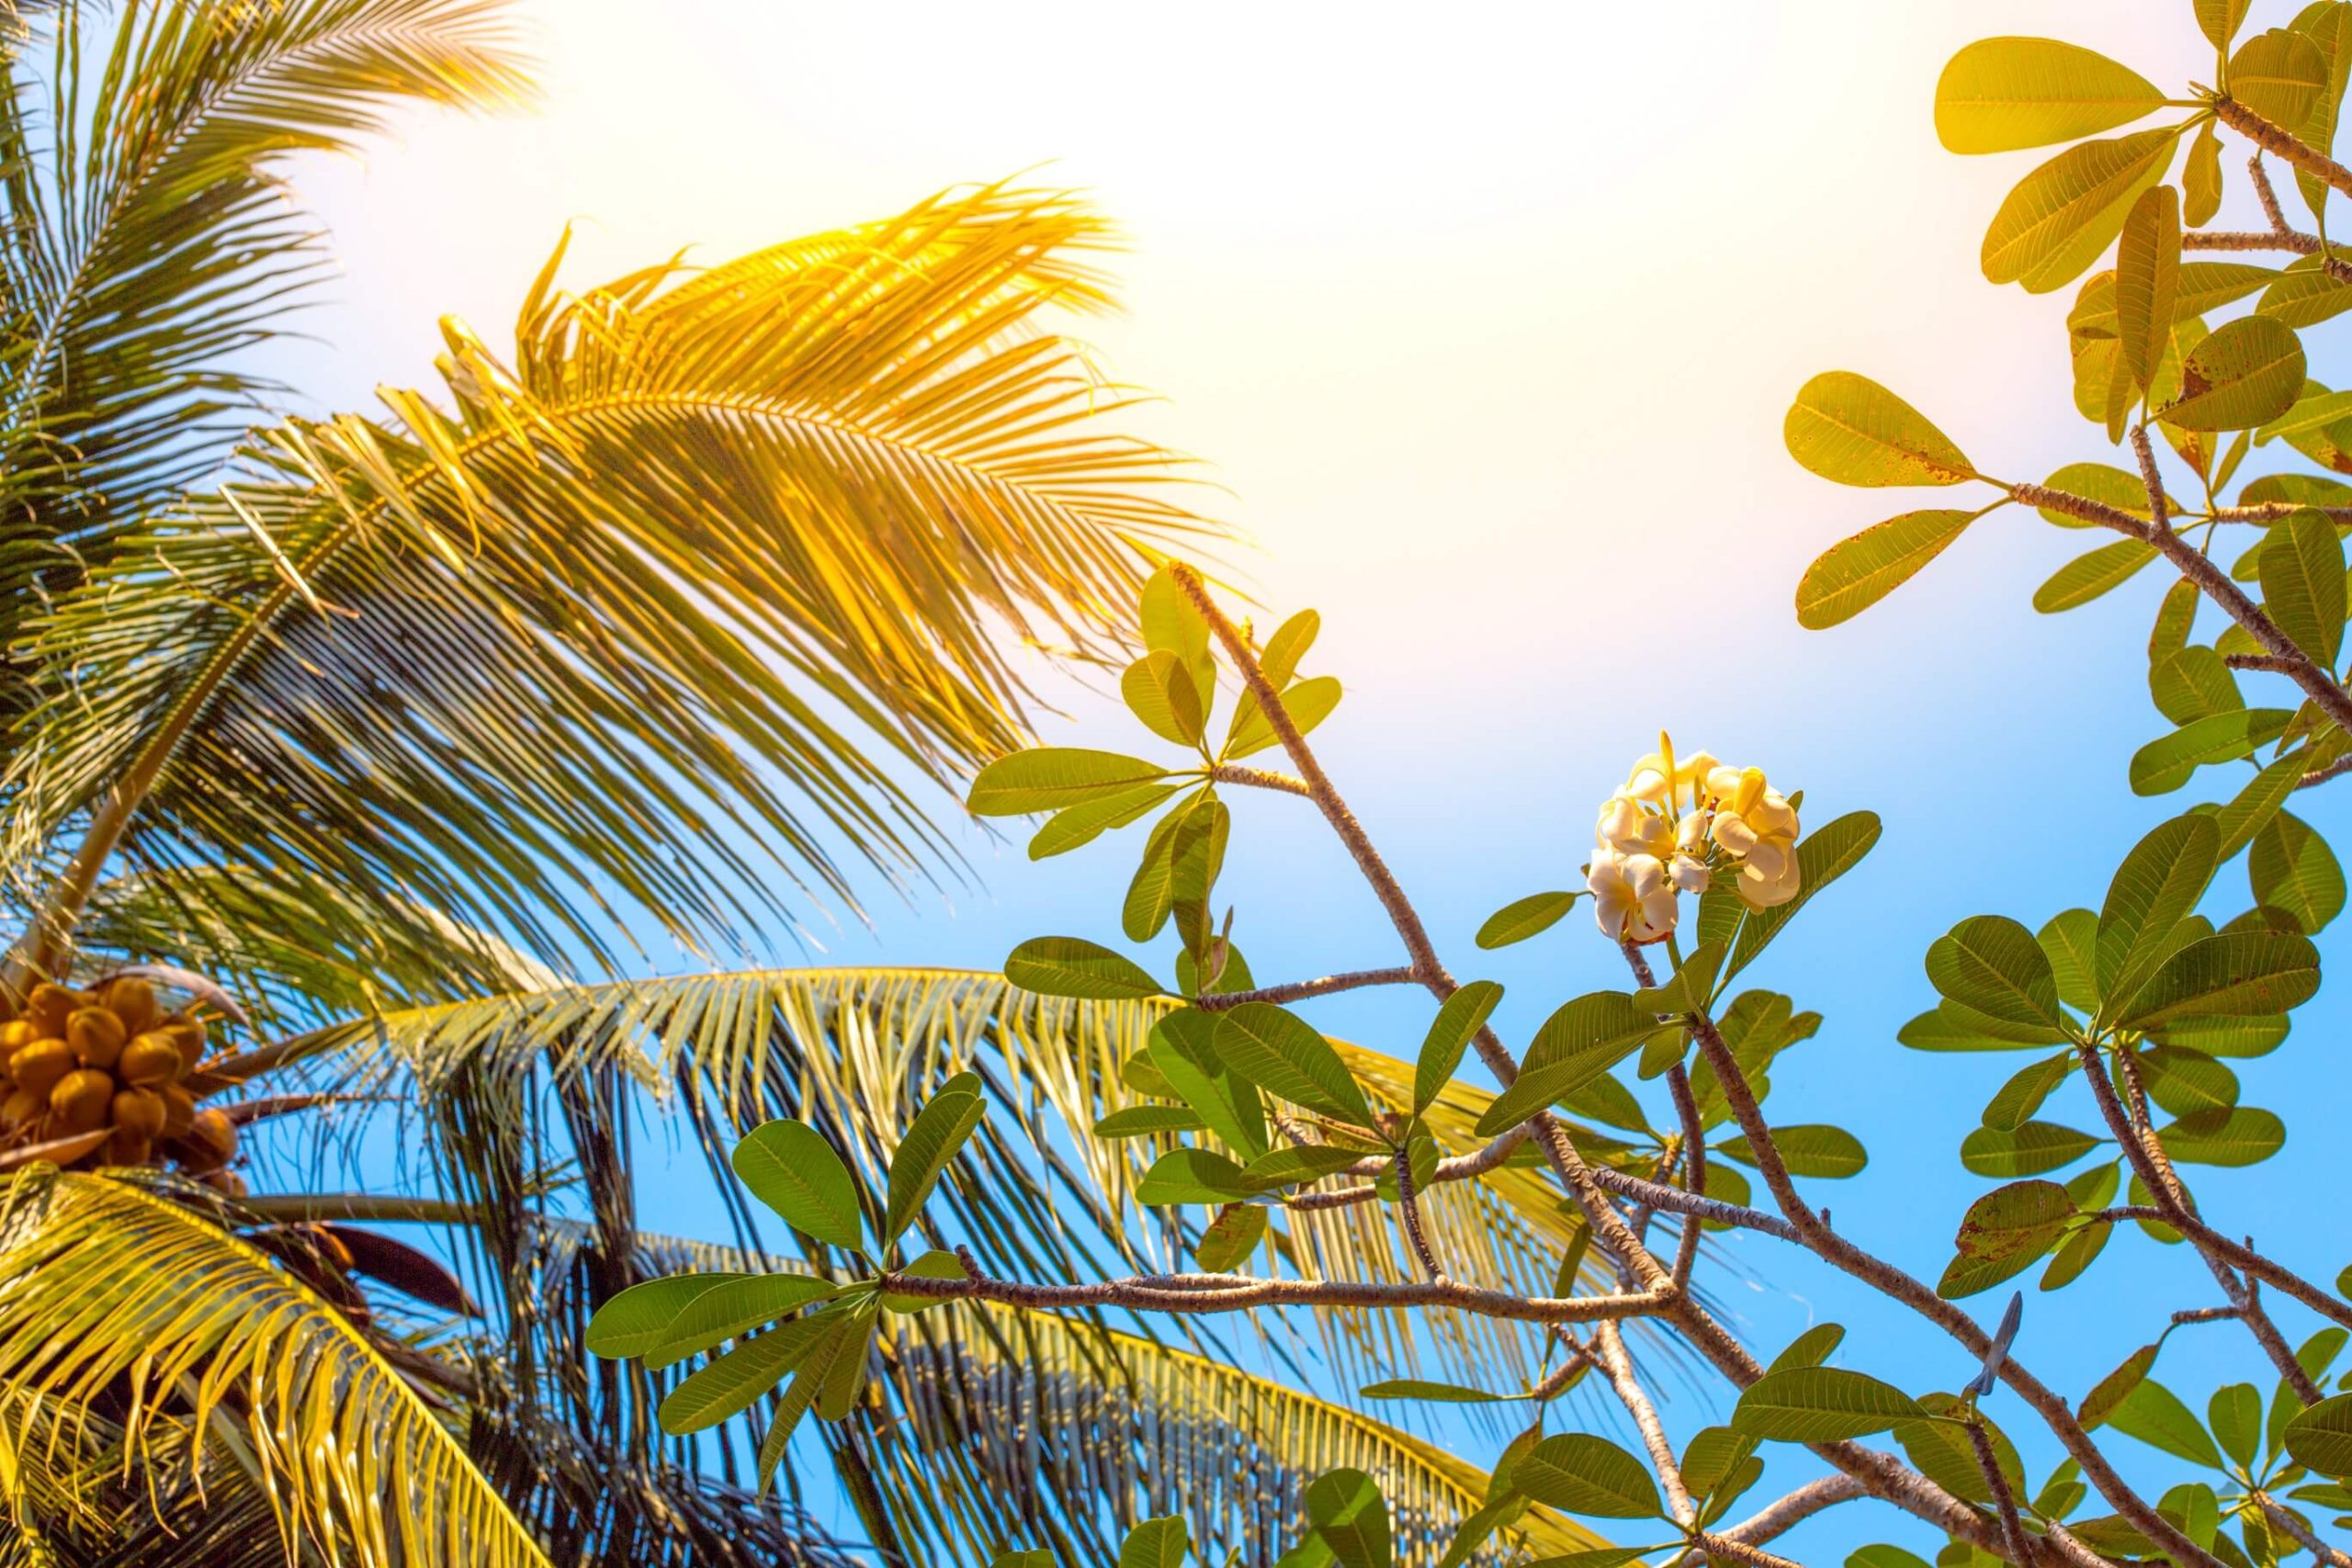 A closeup of a palm tree under the Florida sun